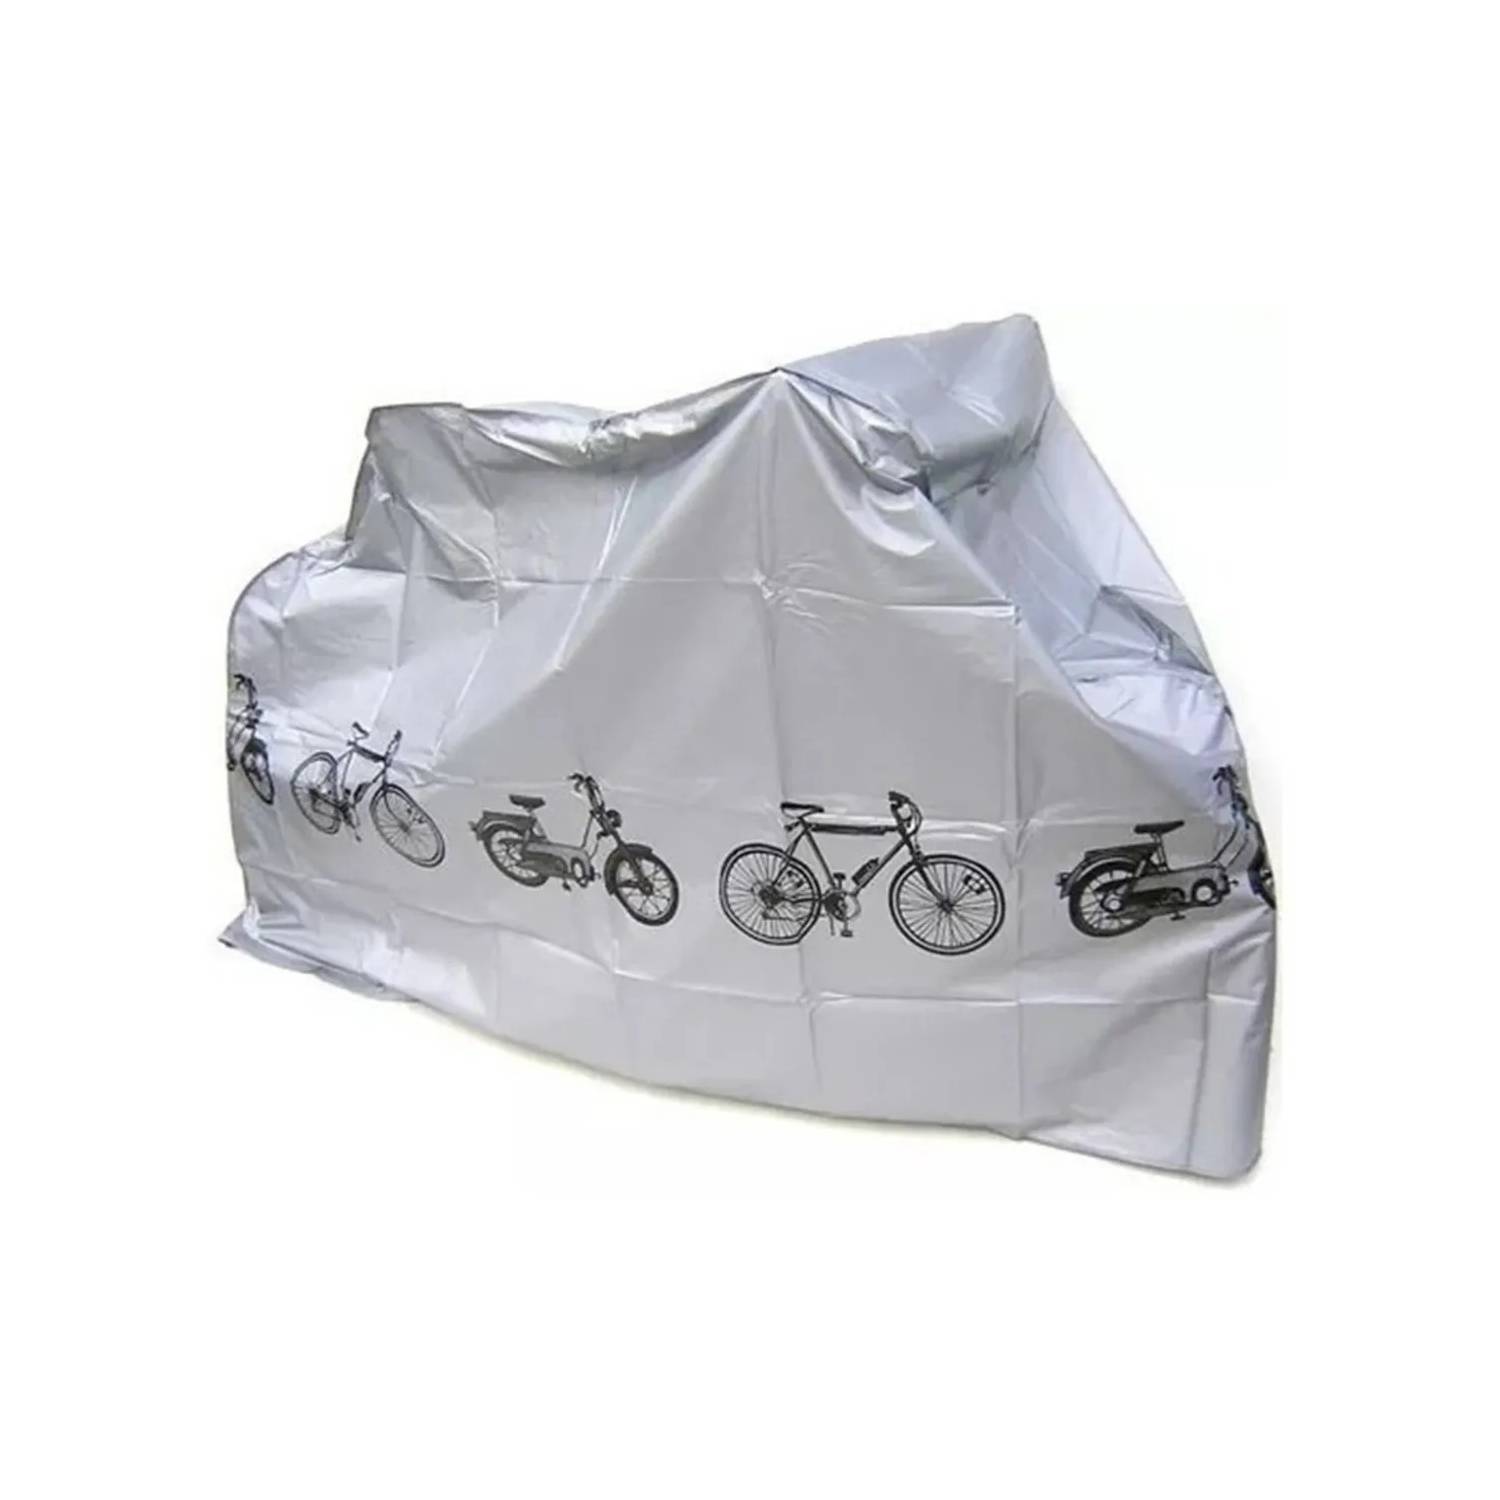 Funda Bicicleta Impermeable Cubre Bicicleta Cobertor Grueso!